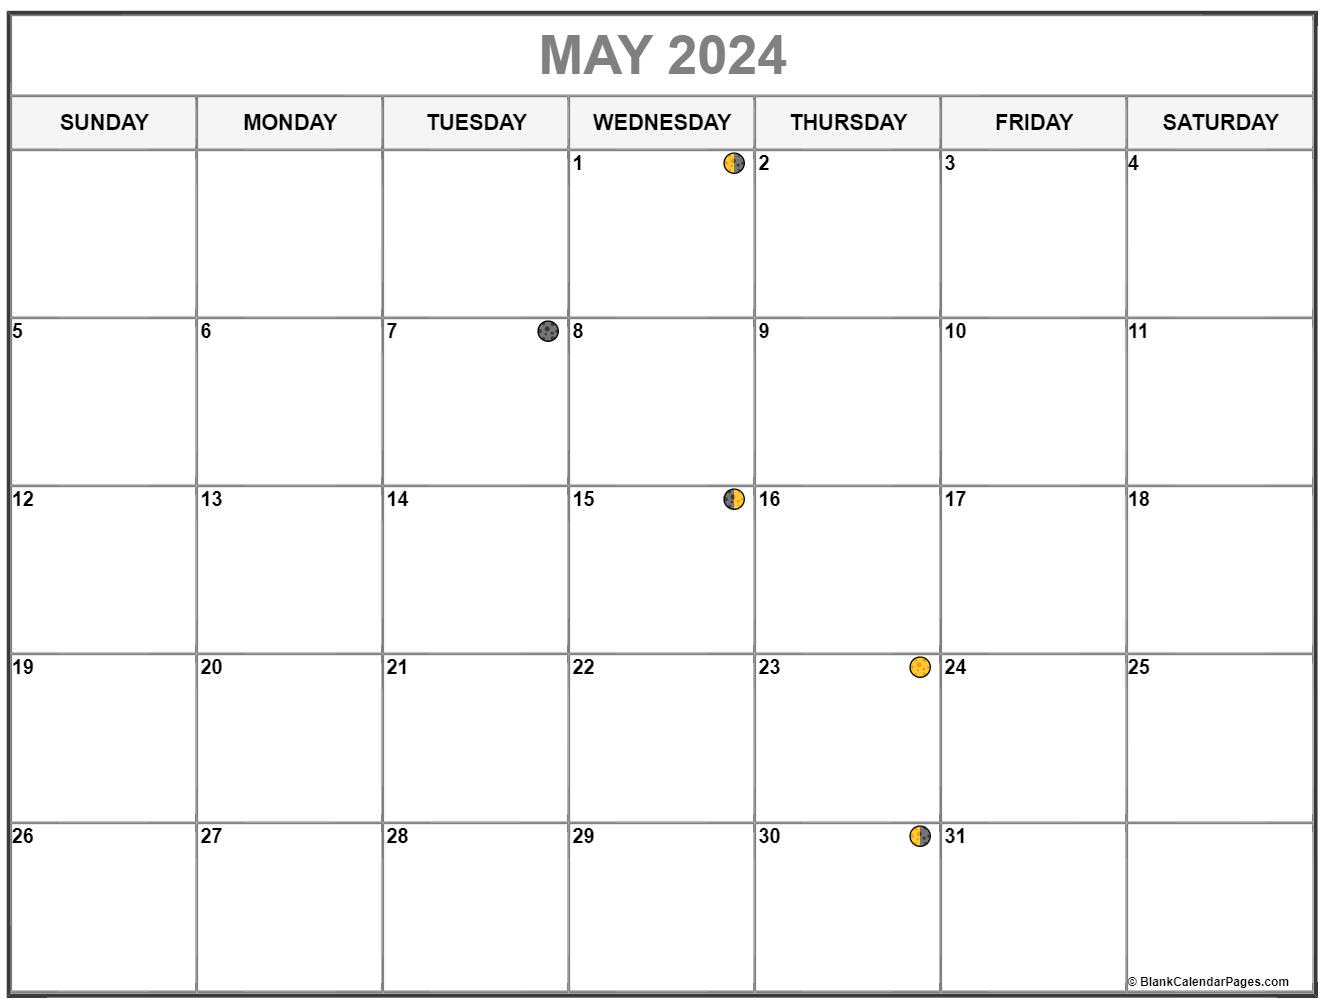 May 2020 Lunar Calendar | Moon Phase Calendar1767 x 1333